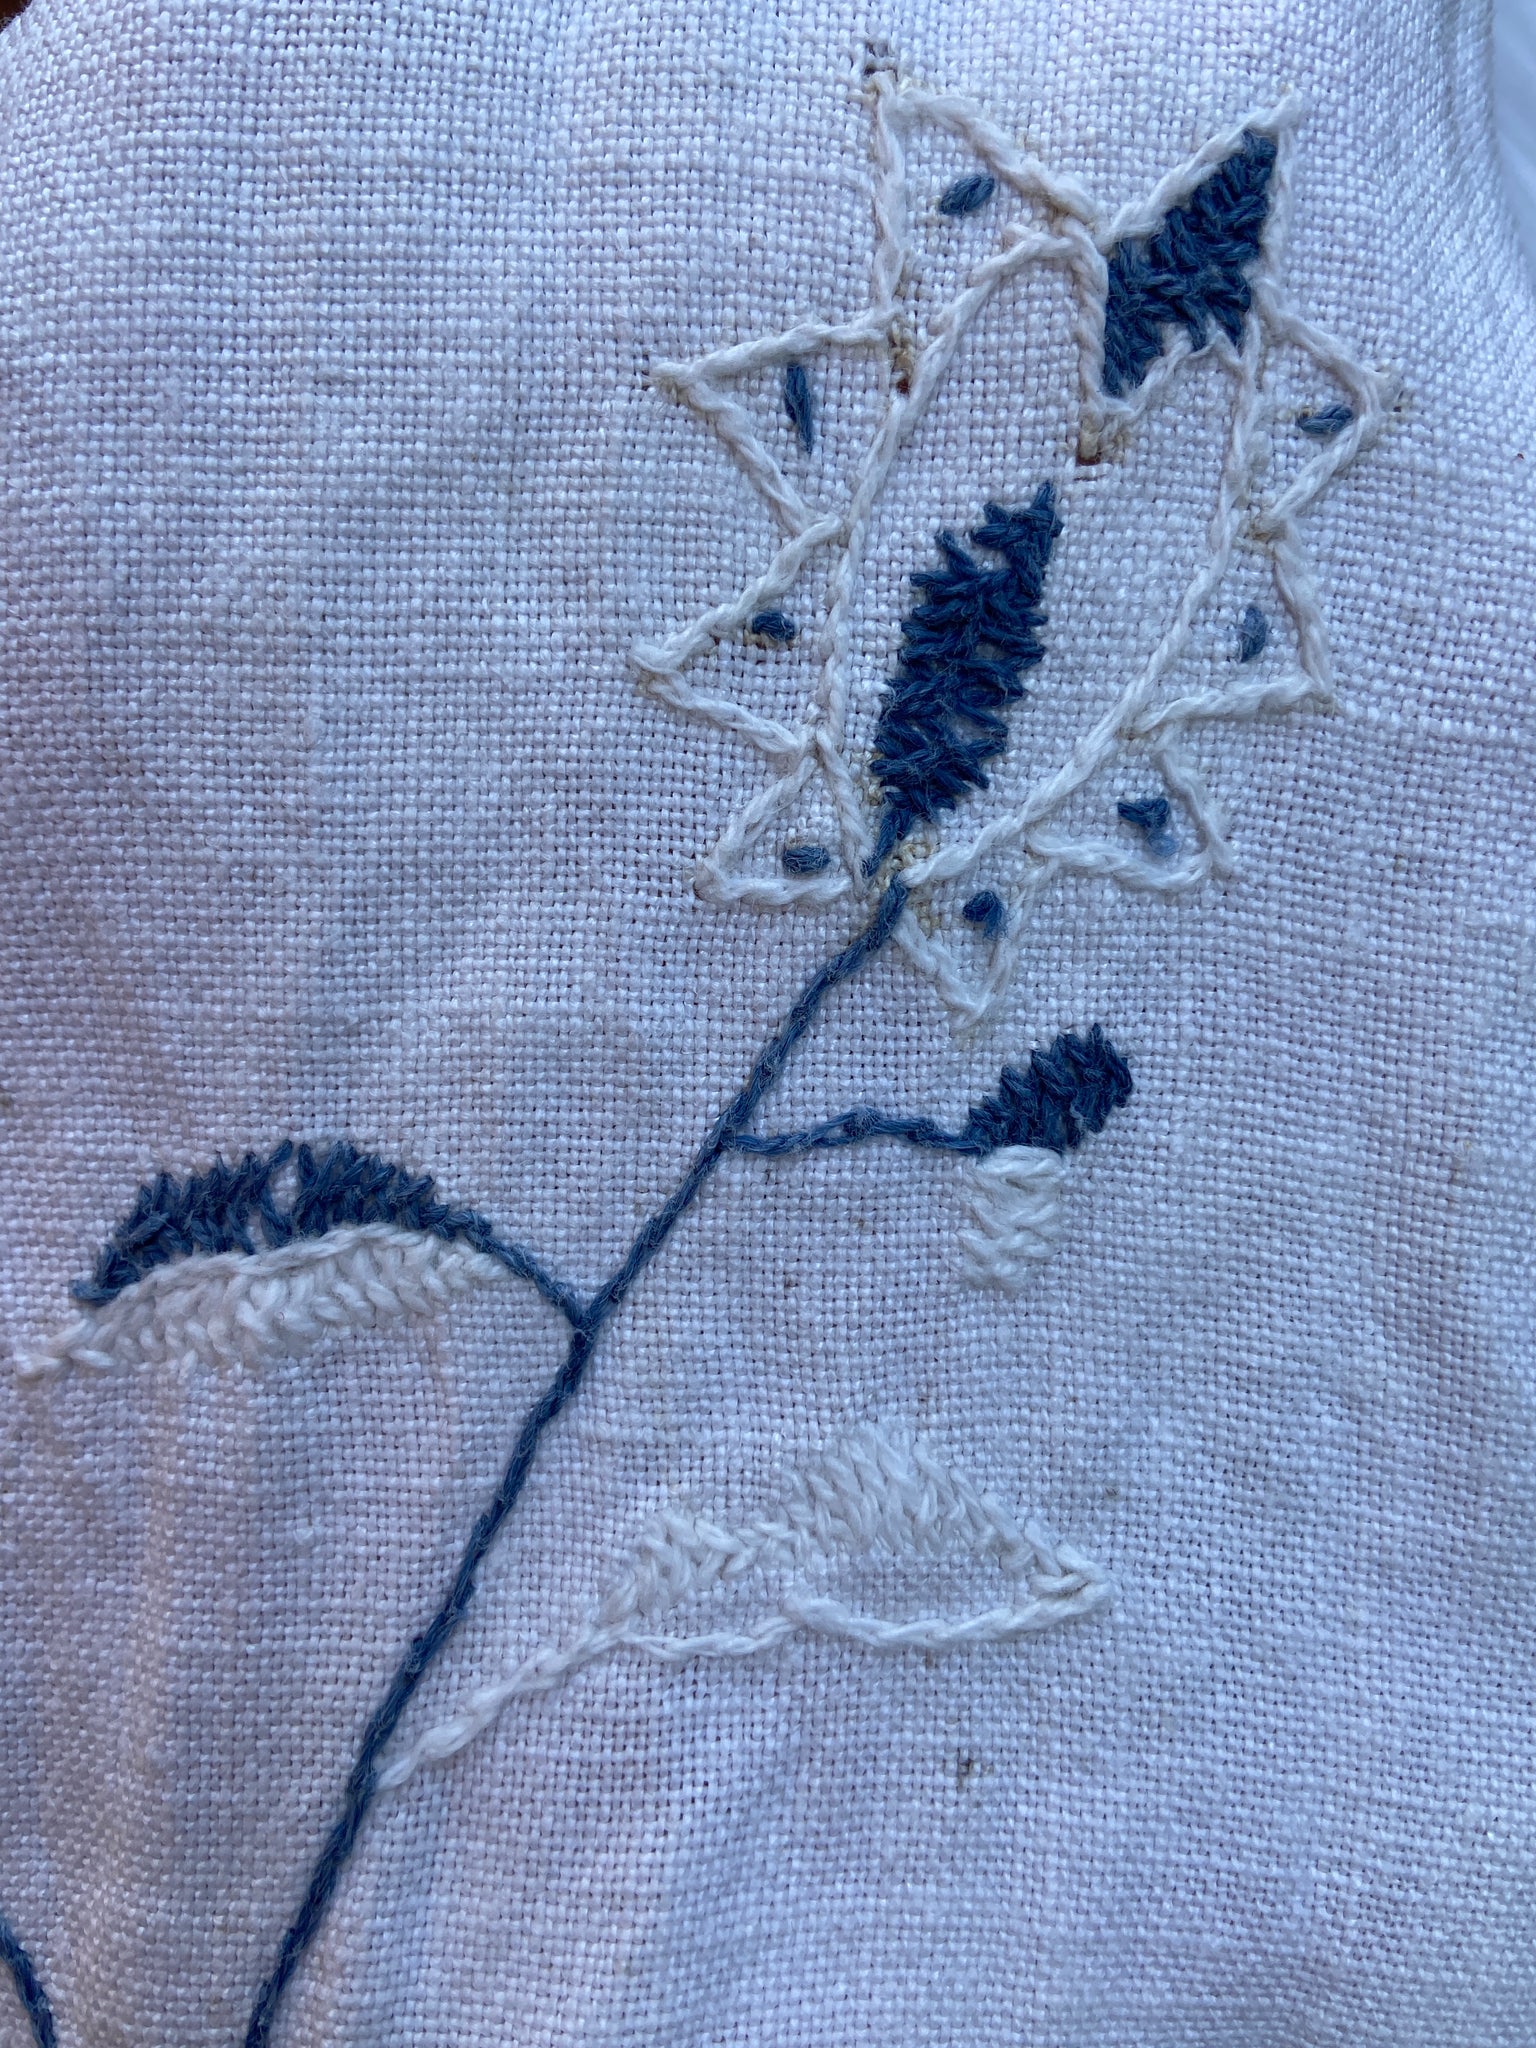 Antique Europen Linen and Cornflower Blue Floral Embroidered Skirt